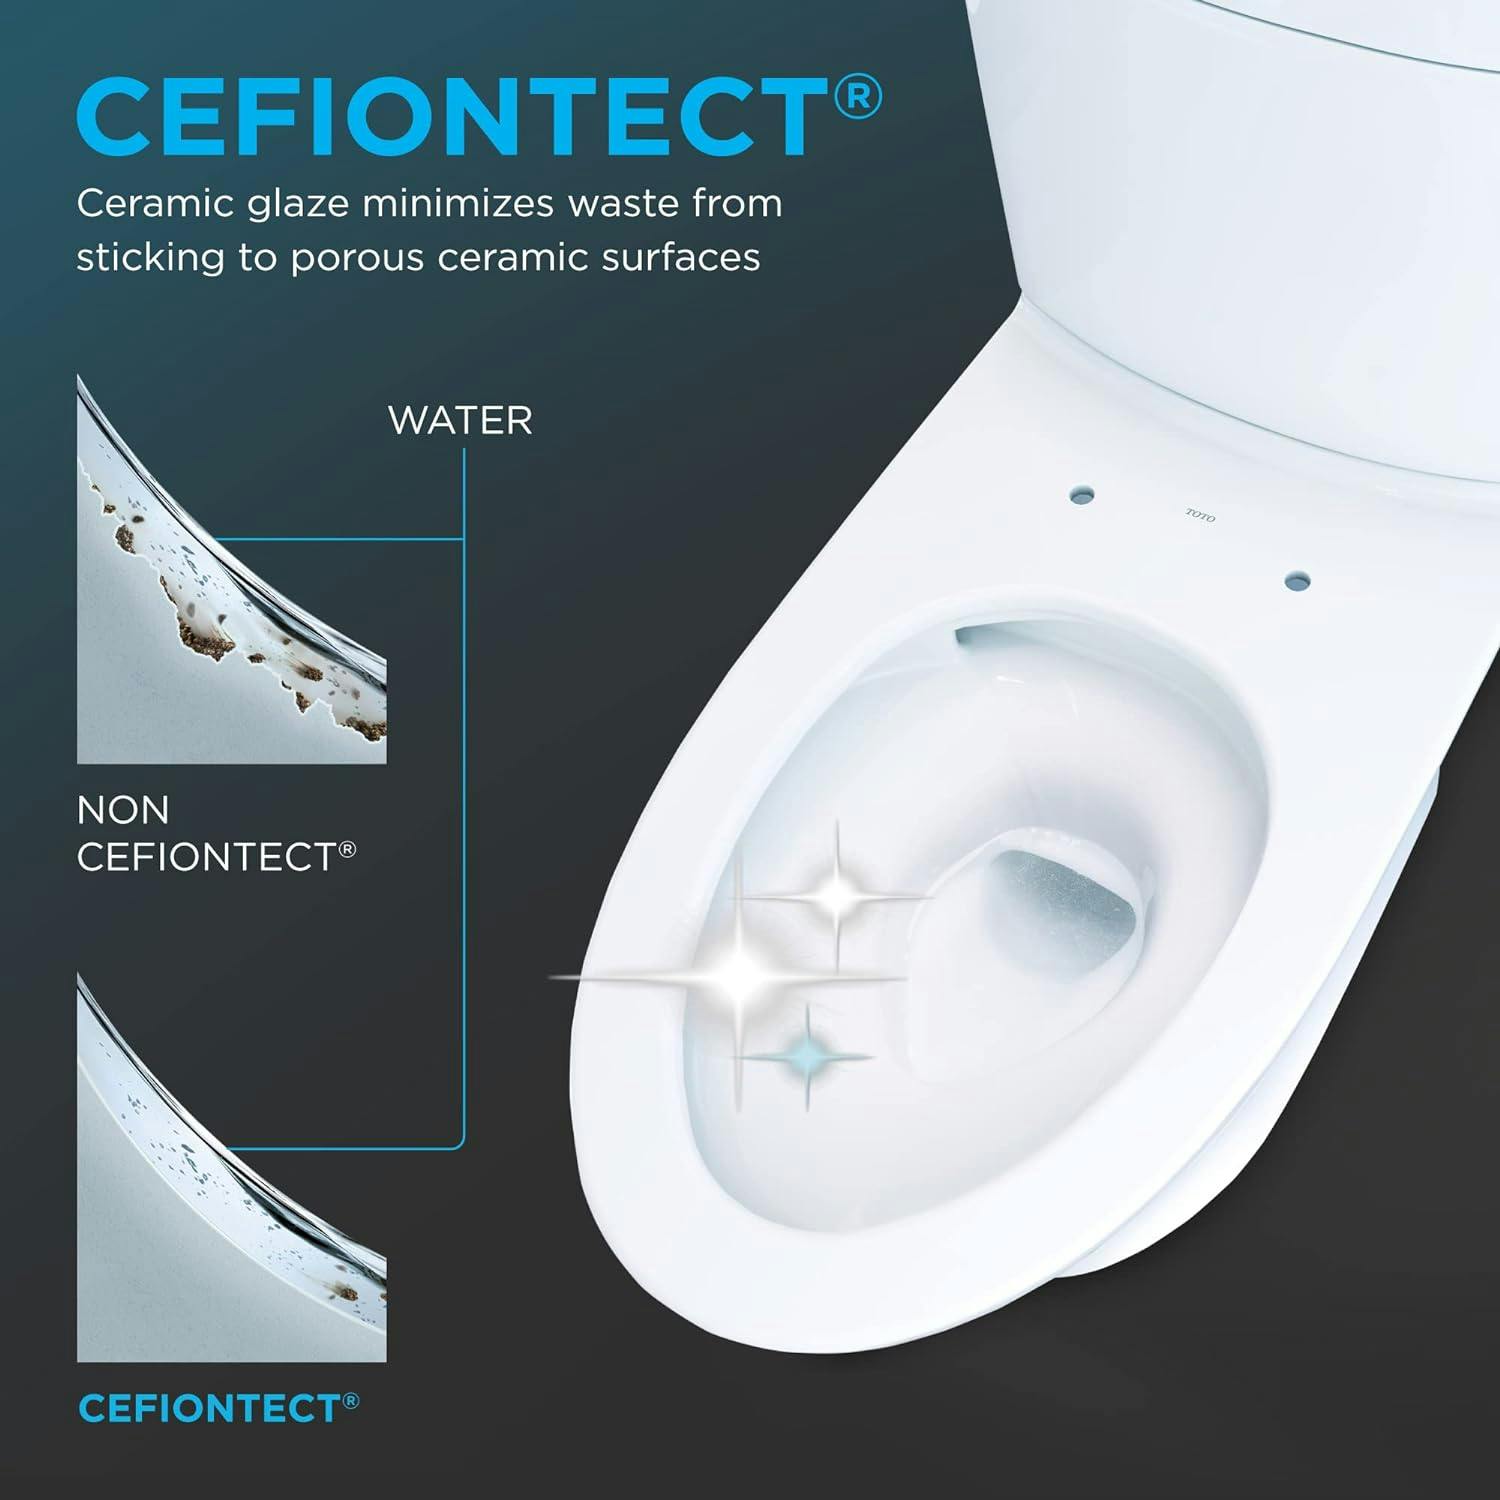 Elongated Bone Vitreous China Dual-Flush High-Efficiency Toilet